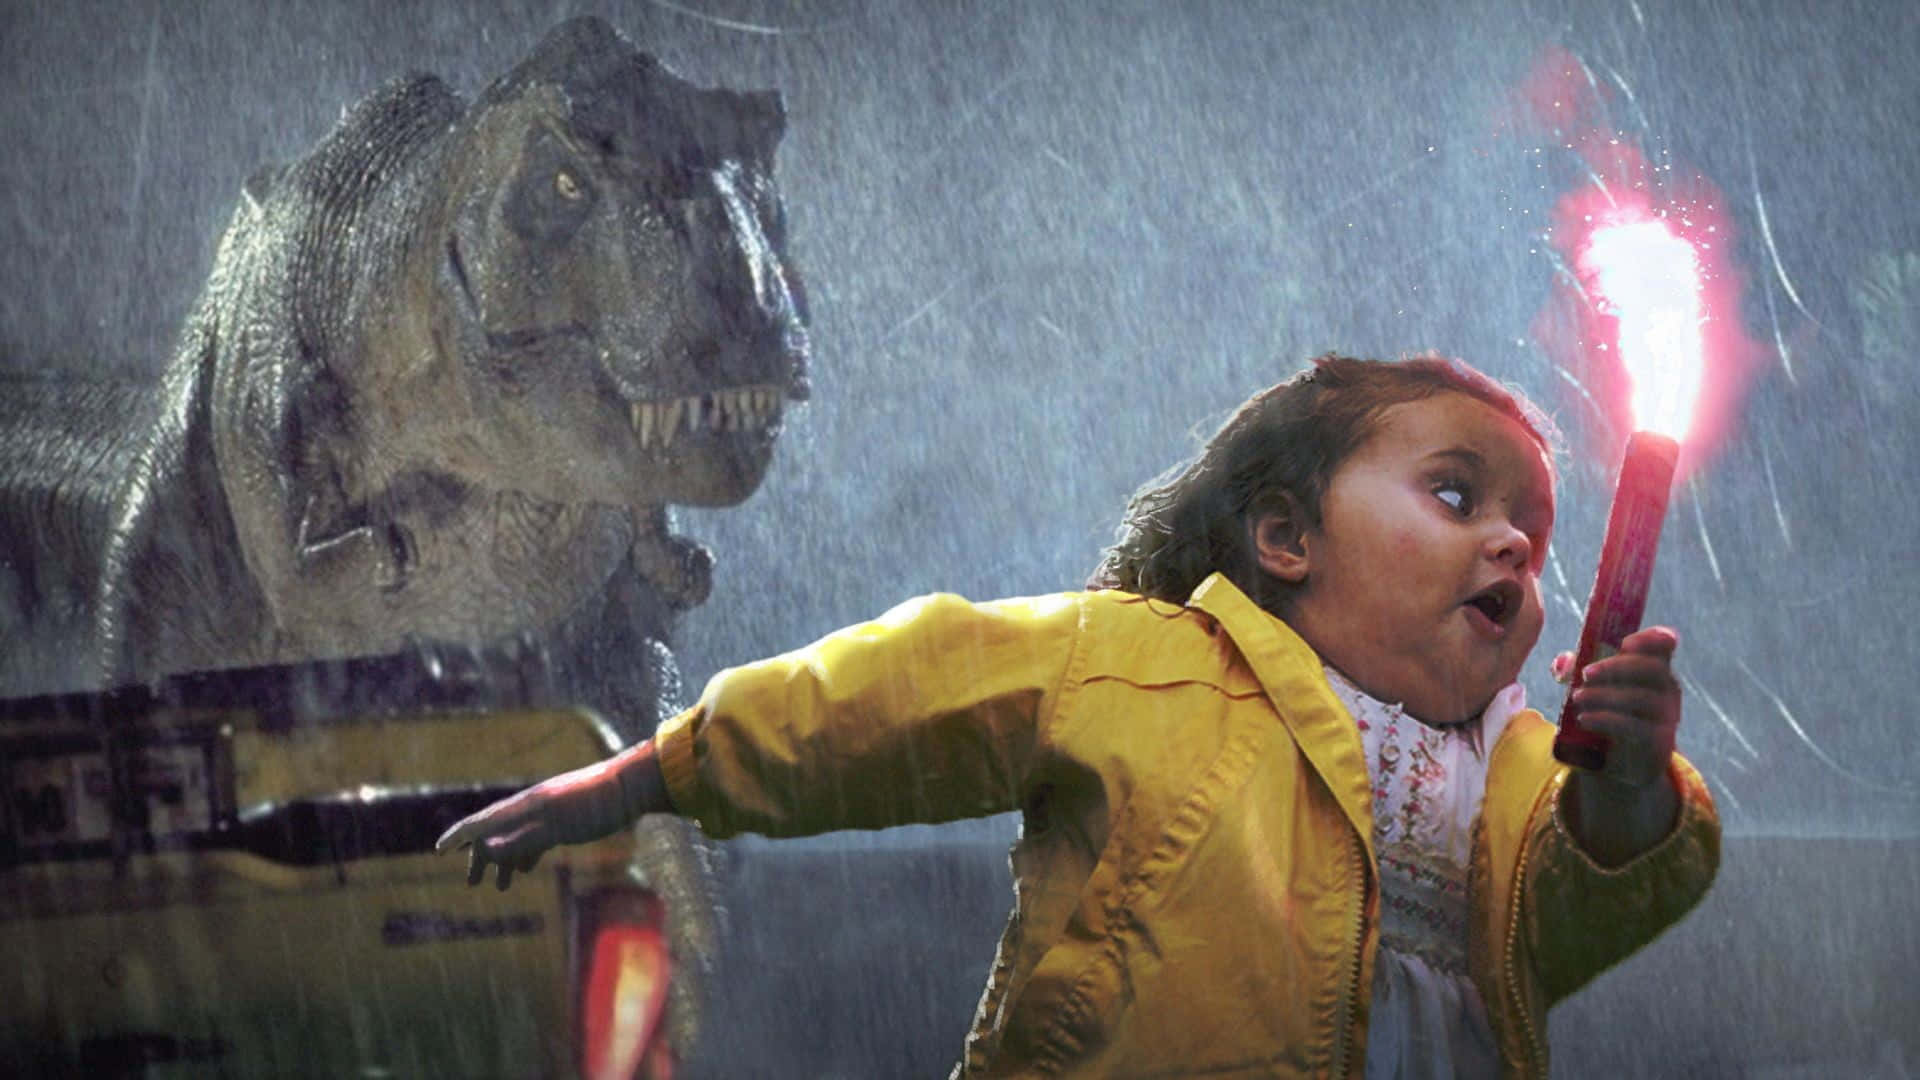 Dinosaurjagter Billede Af En Baby-meme.